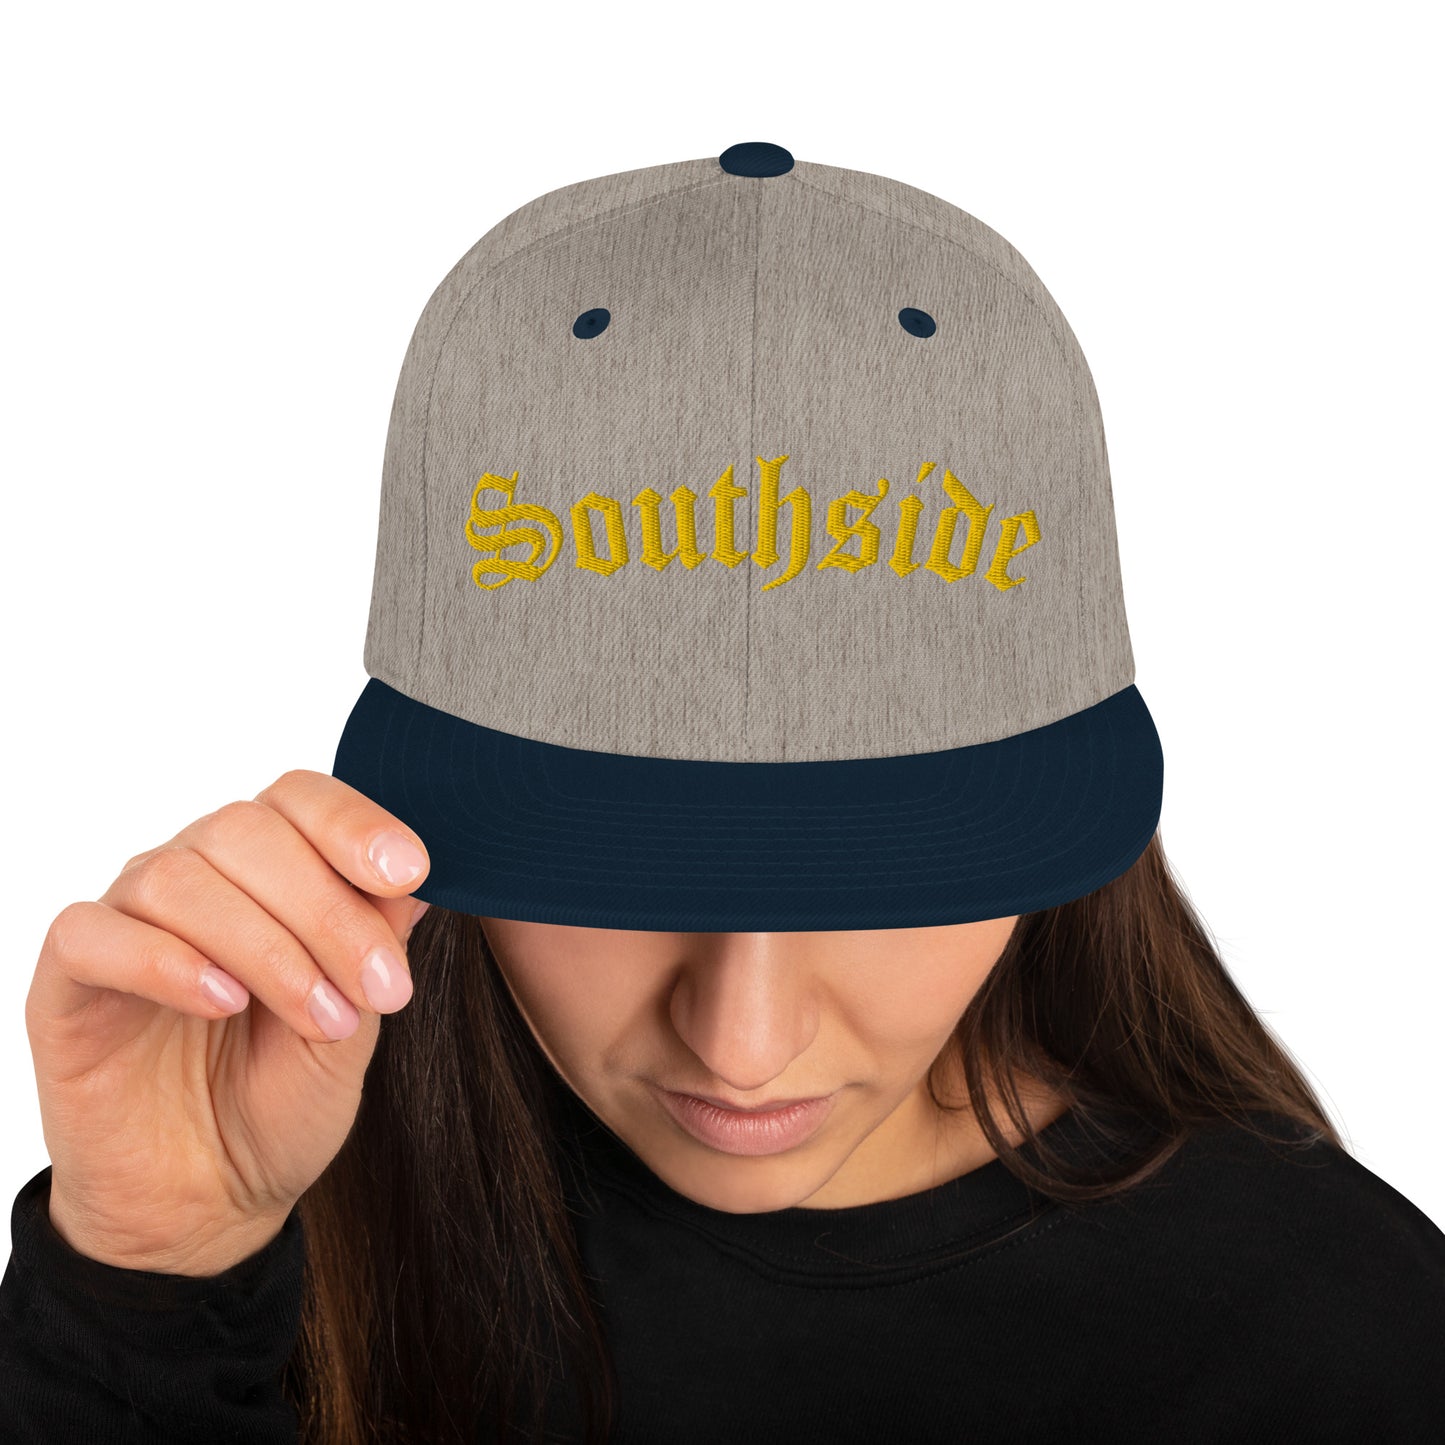 Southside - Snapback Hat